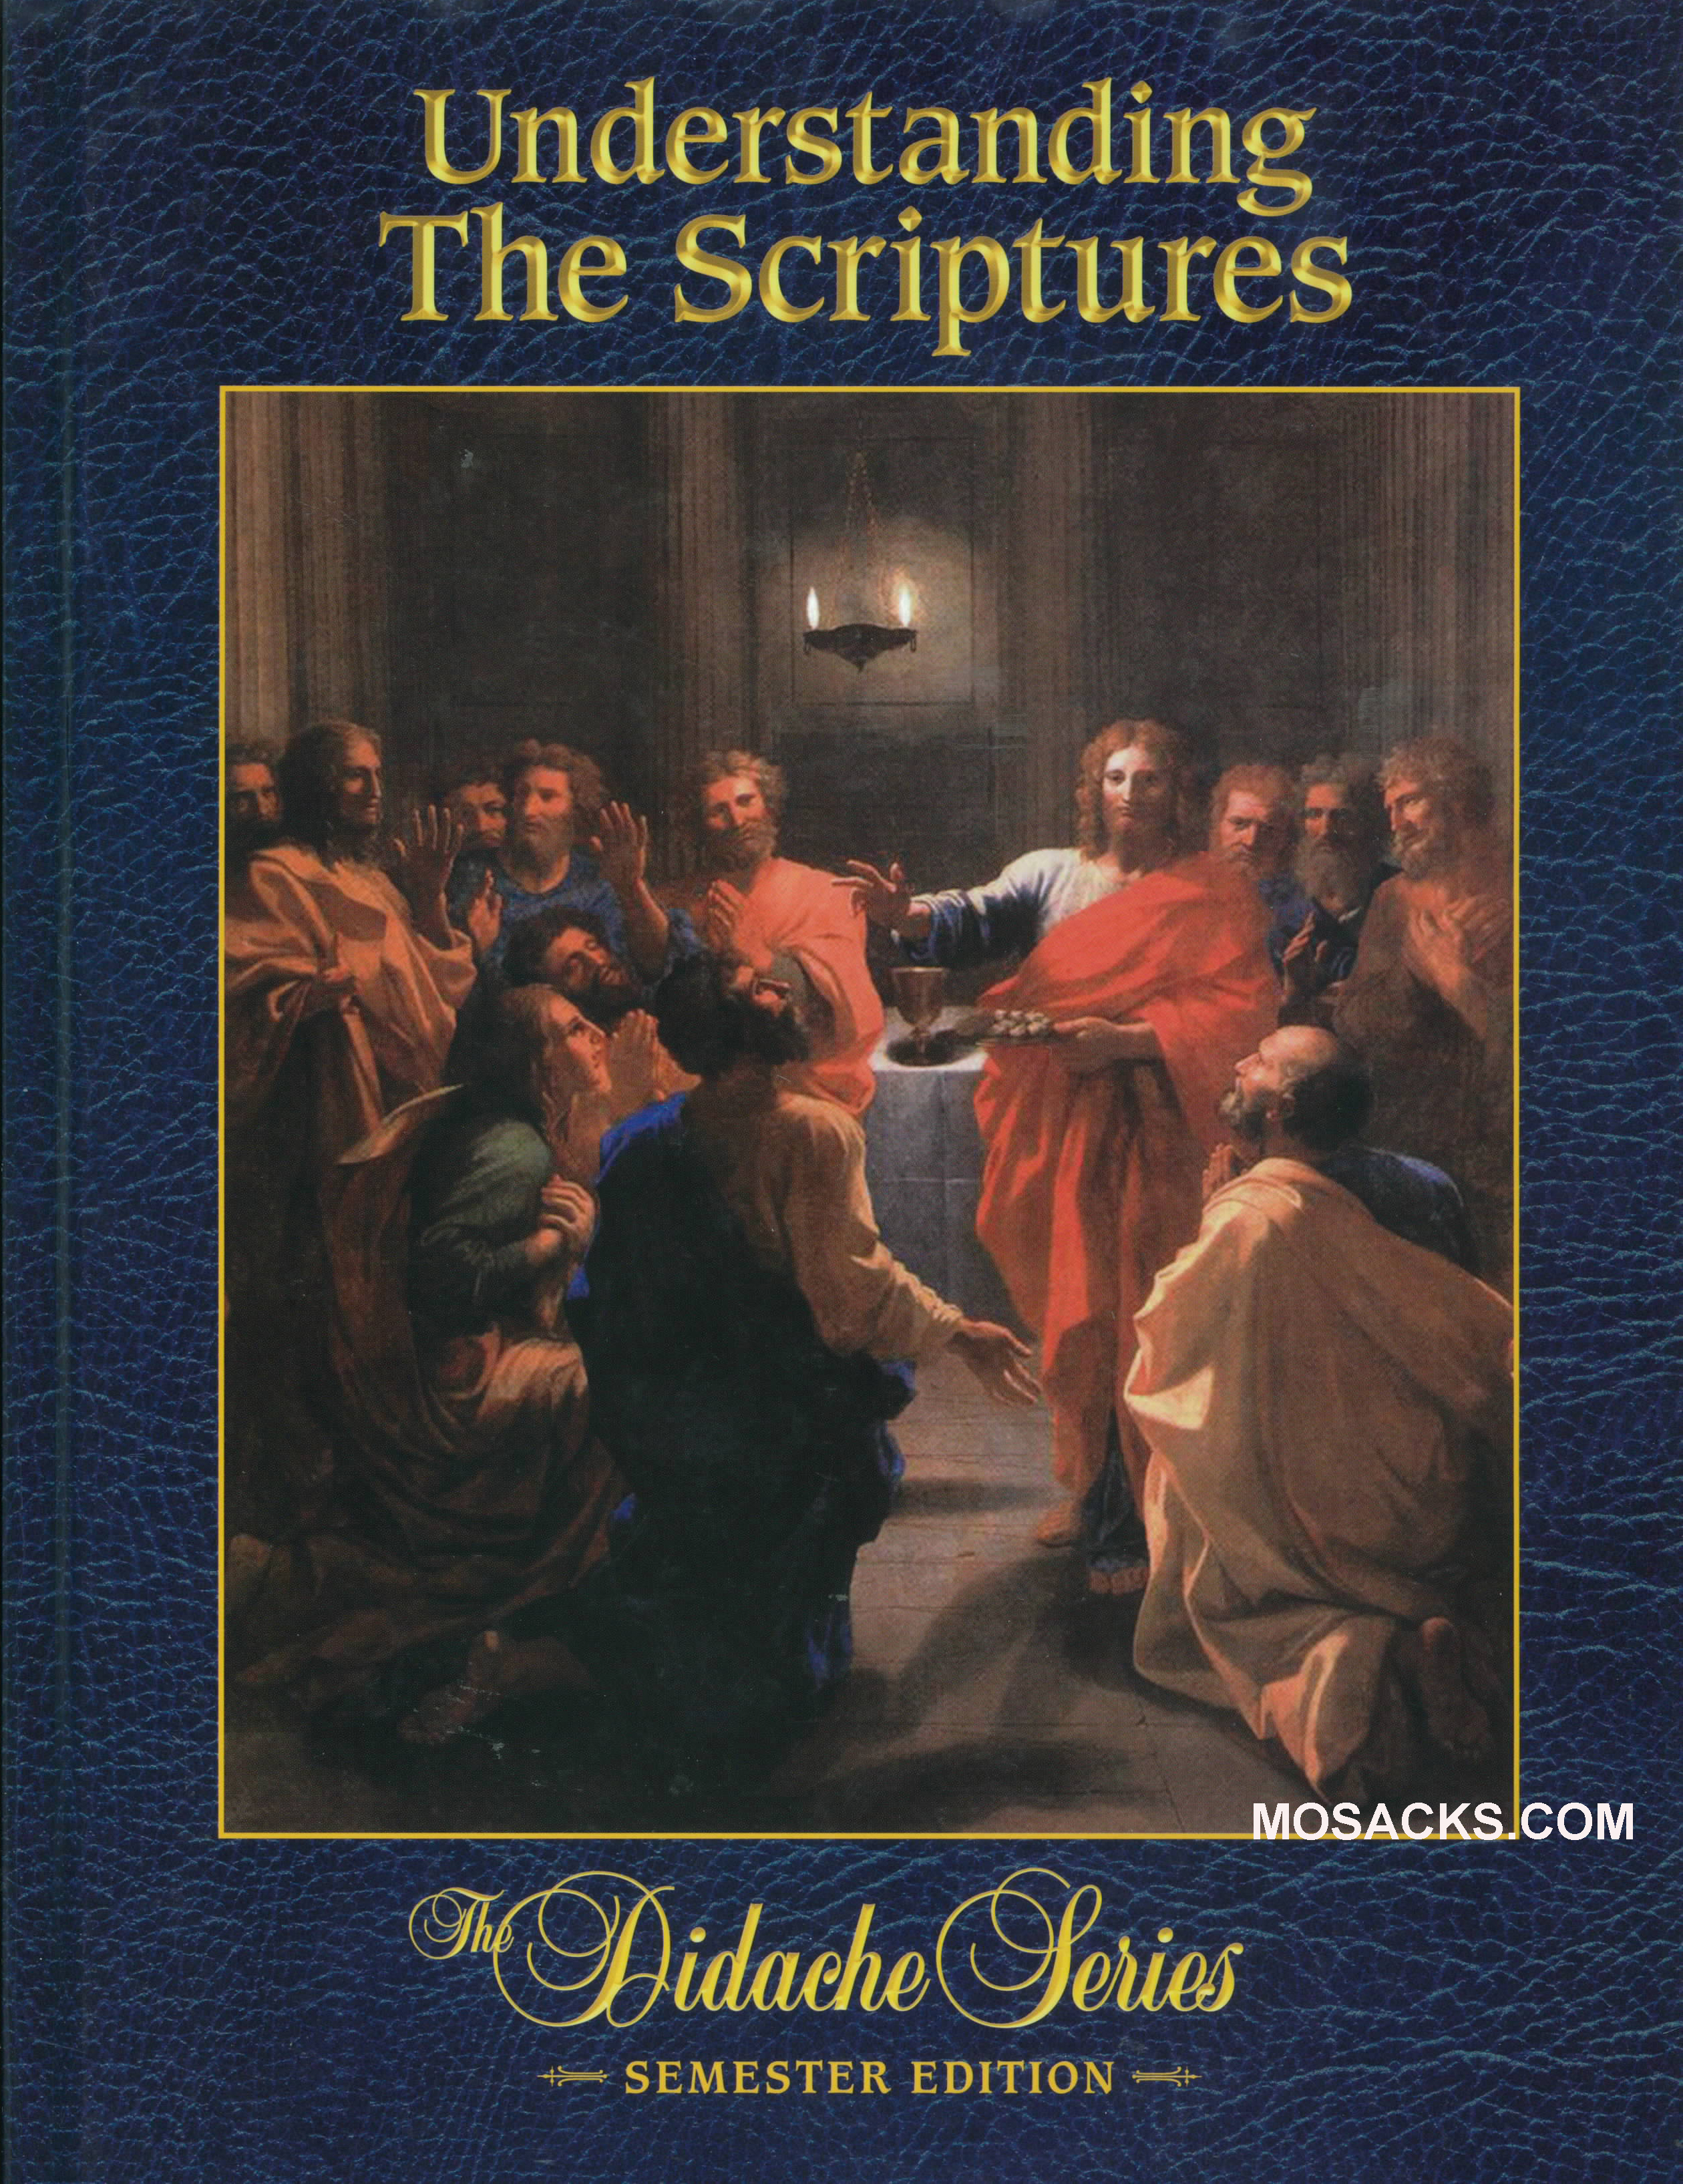 Didache Series Understanding The Scriptures Semester Edition by Dr. Scott Hahn, Ph.D. 45129